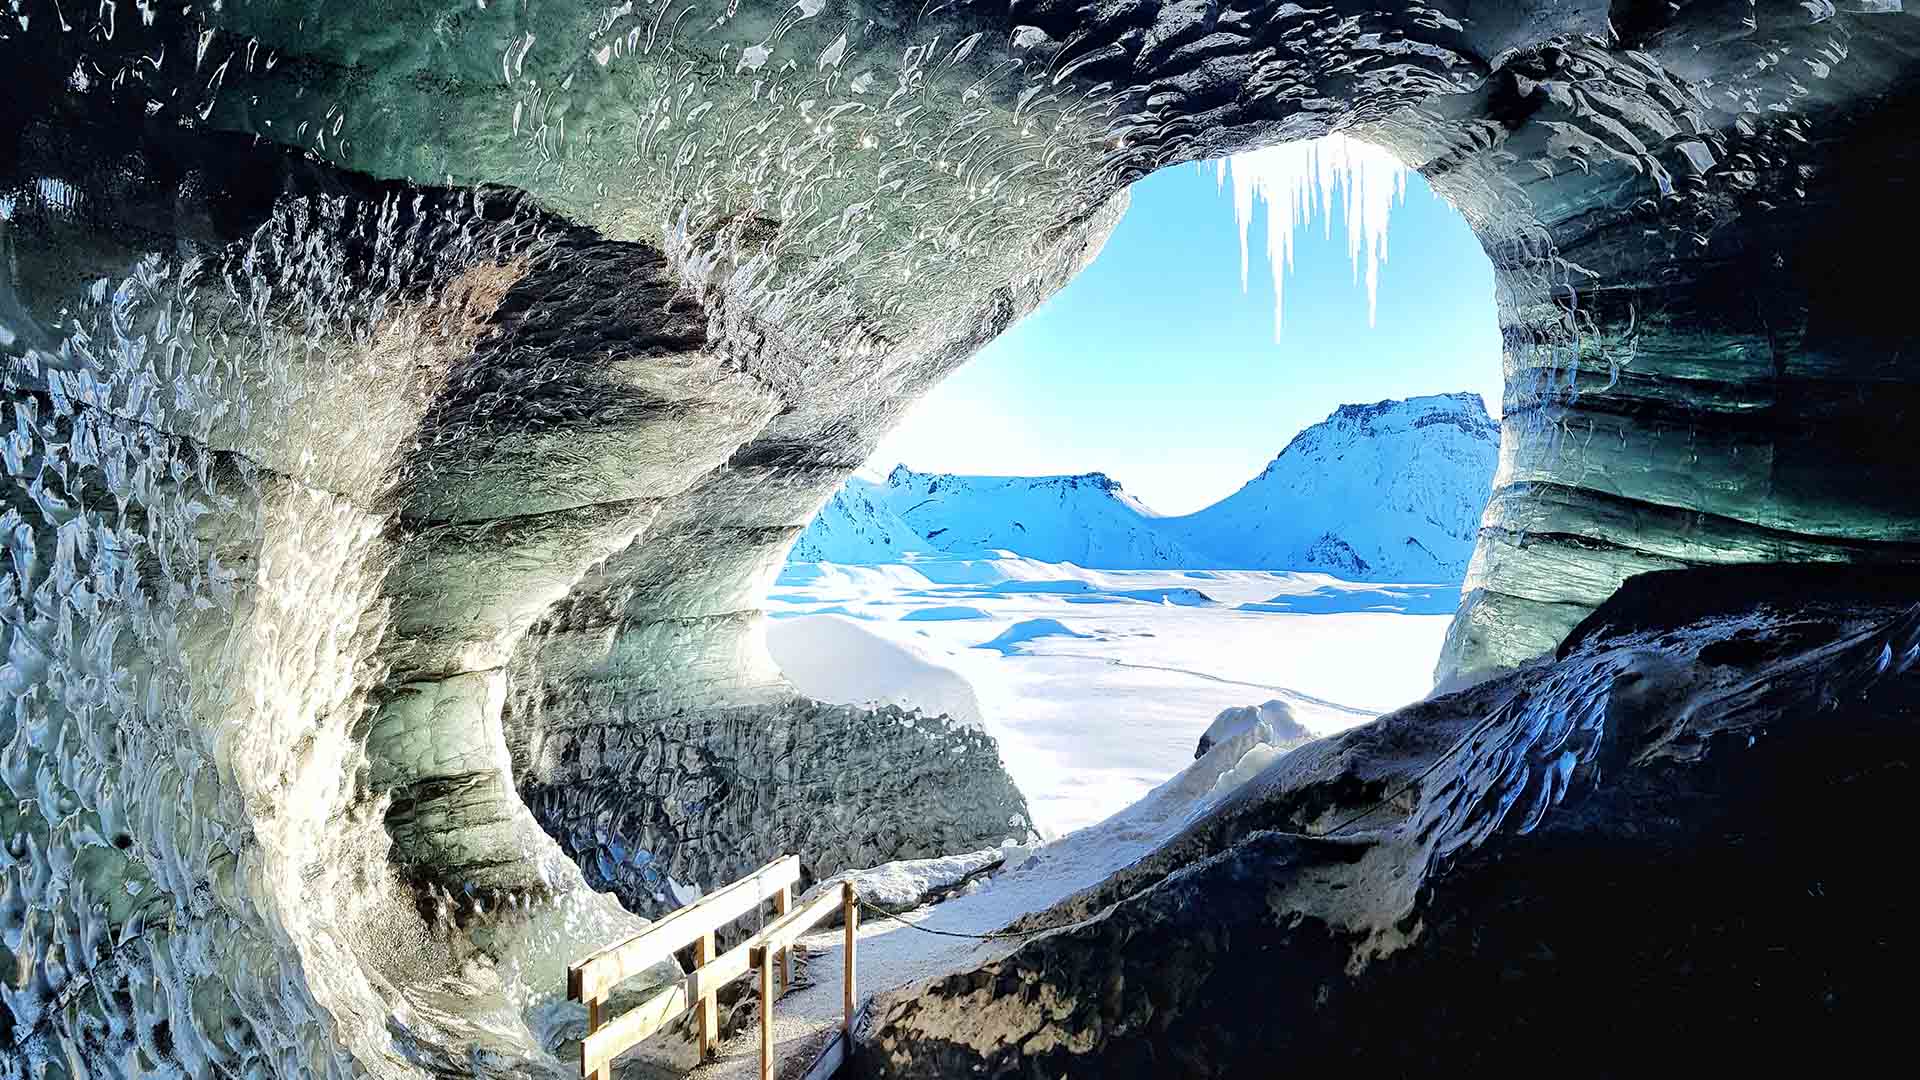 Katla ice cave ©nordicvisitor